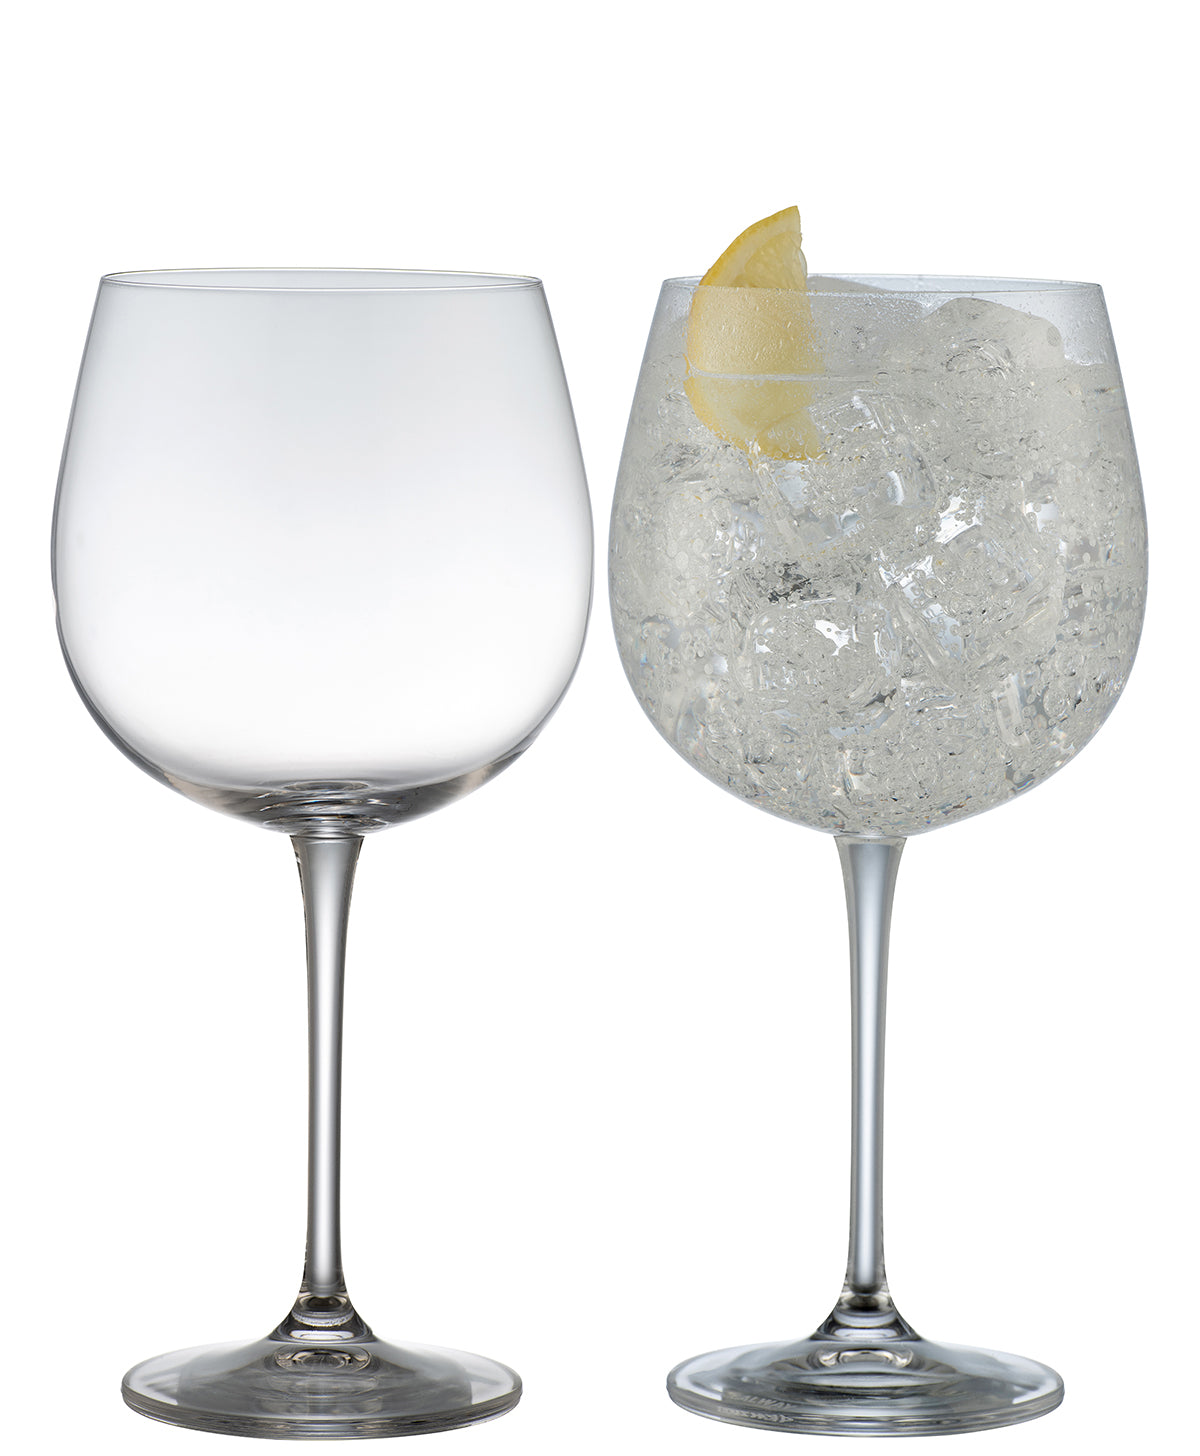 Gin Glasses - Galway Irish Crystal